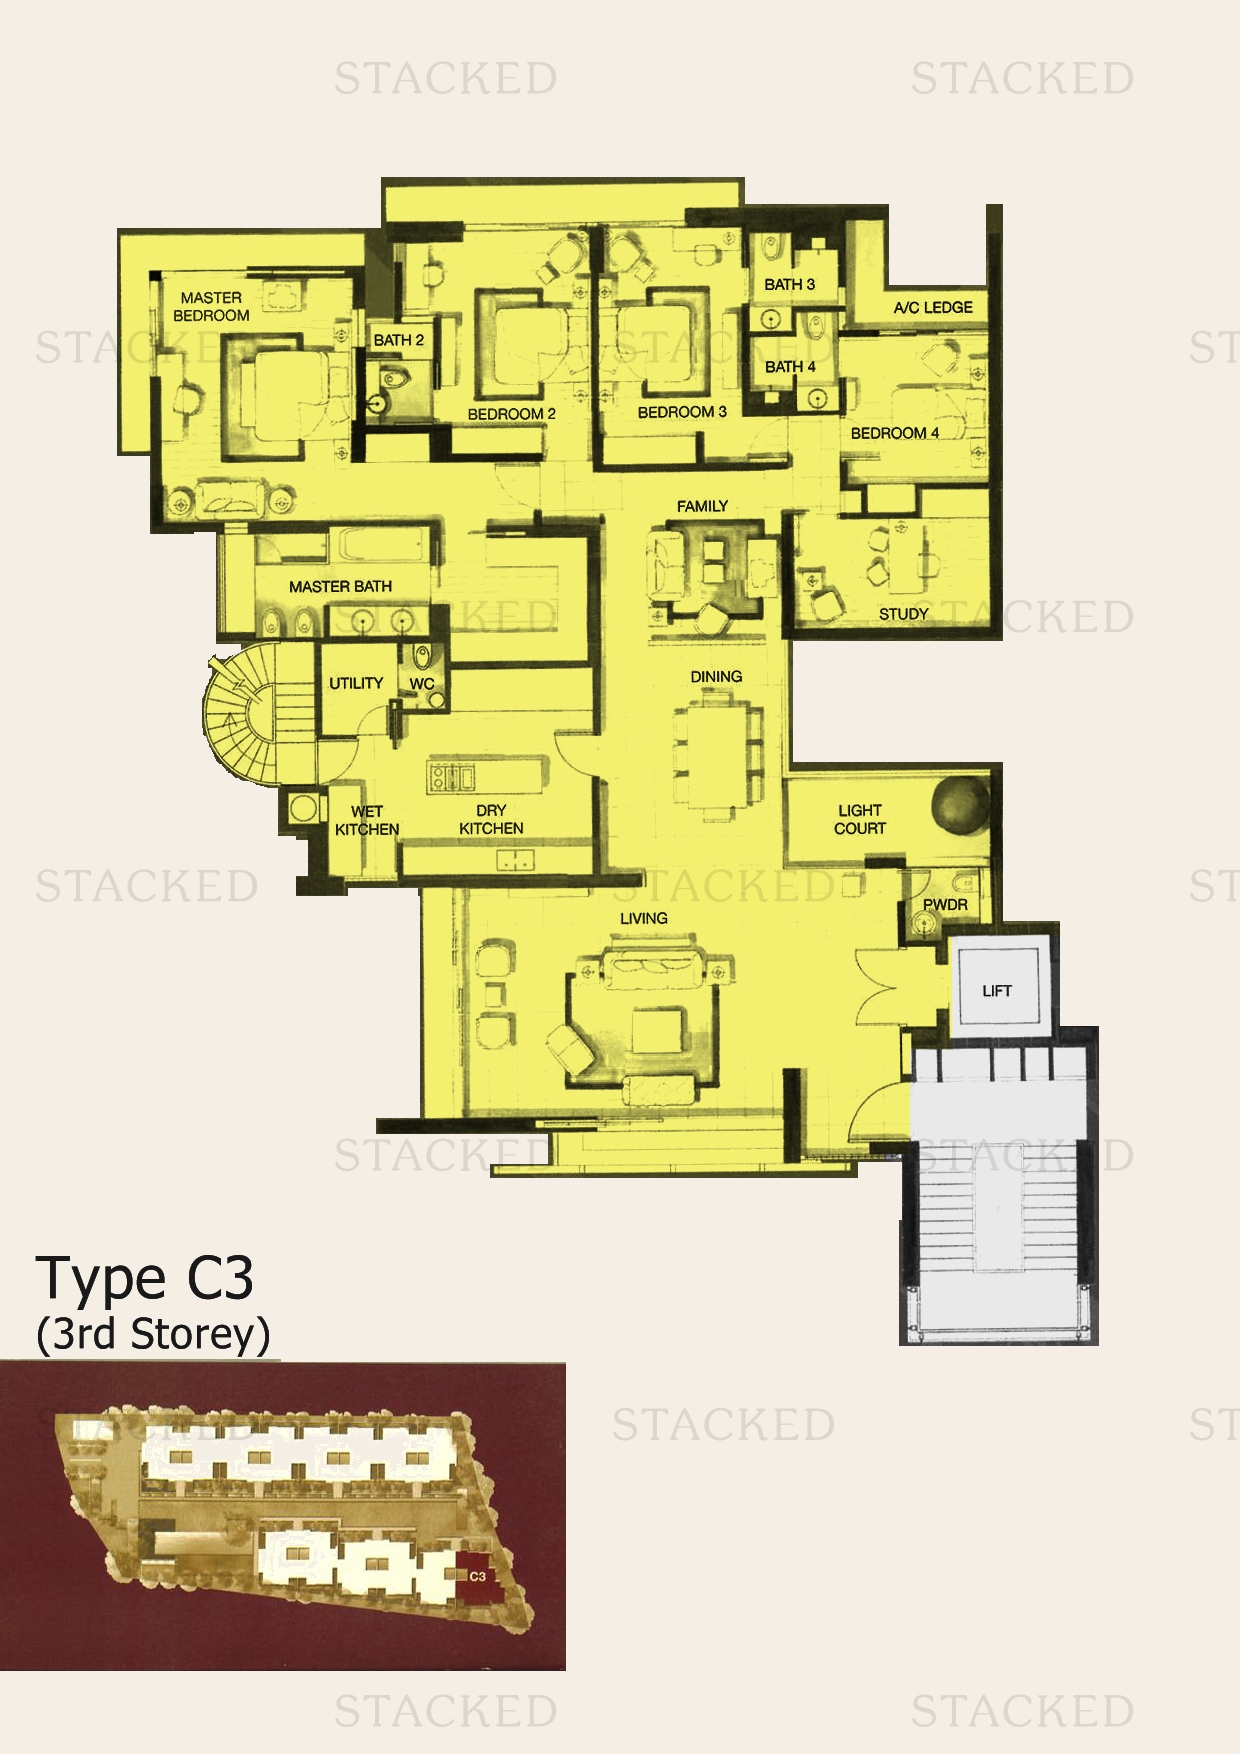 The Ladyhill floor plan